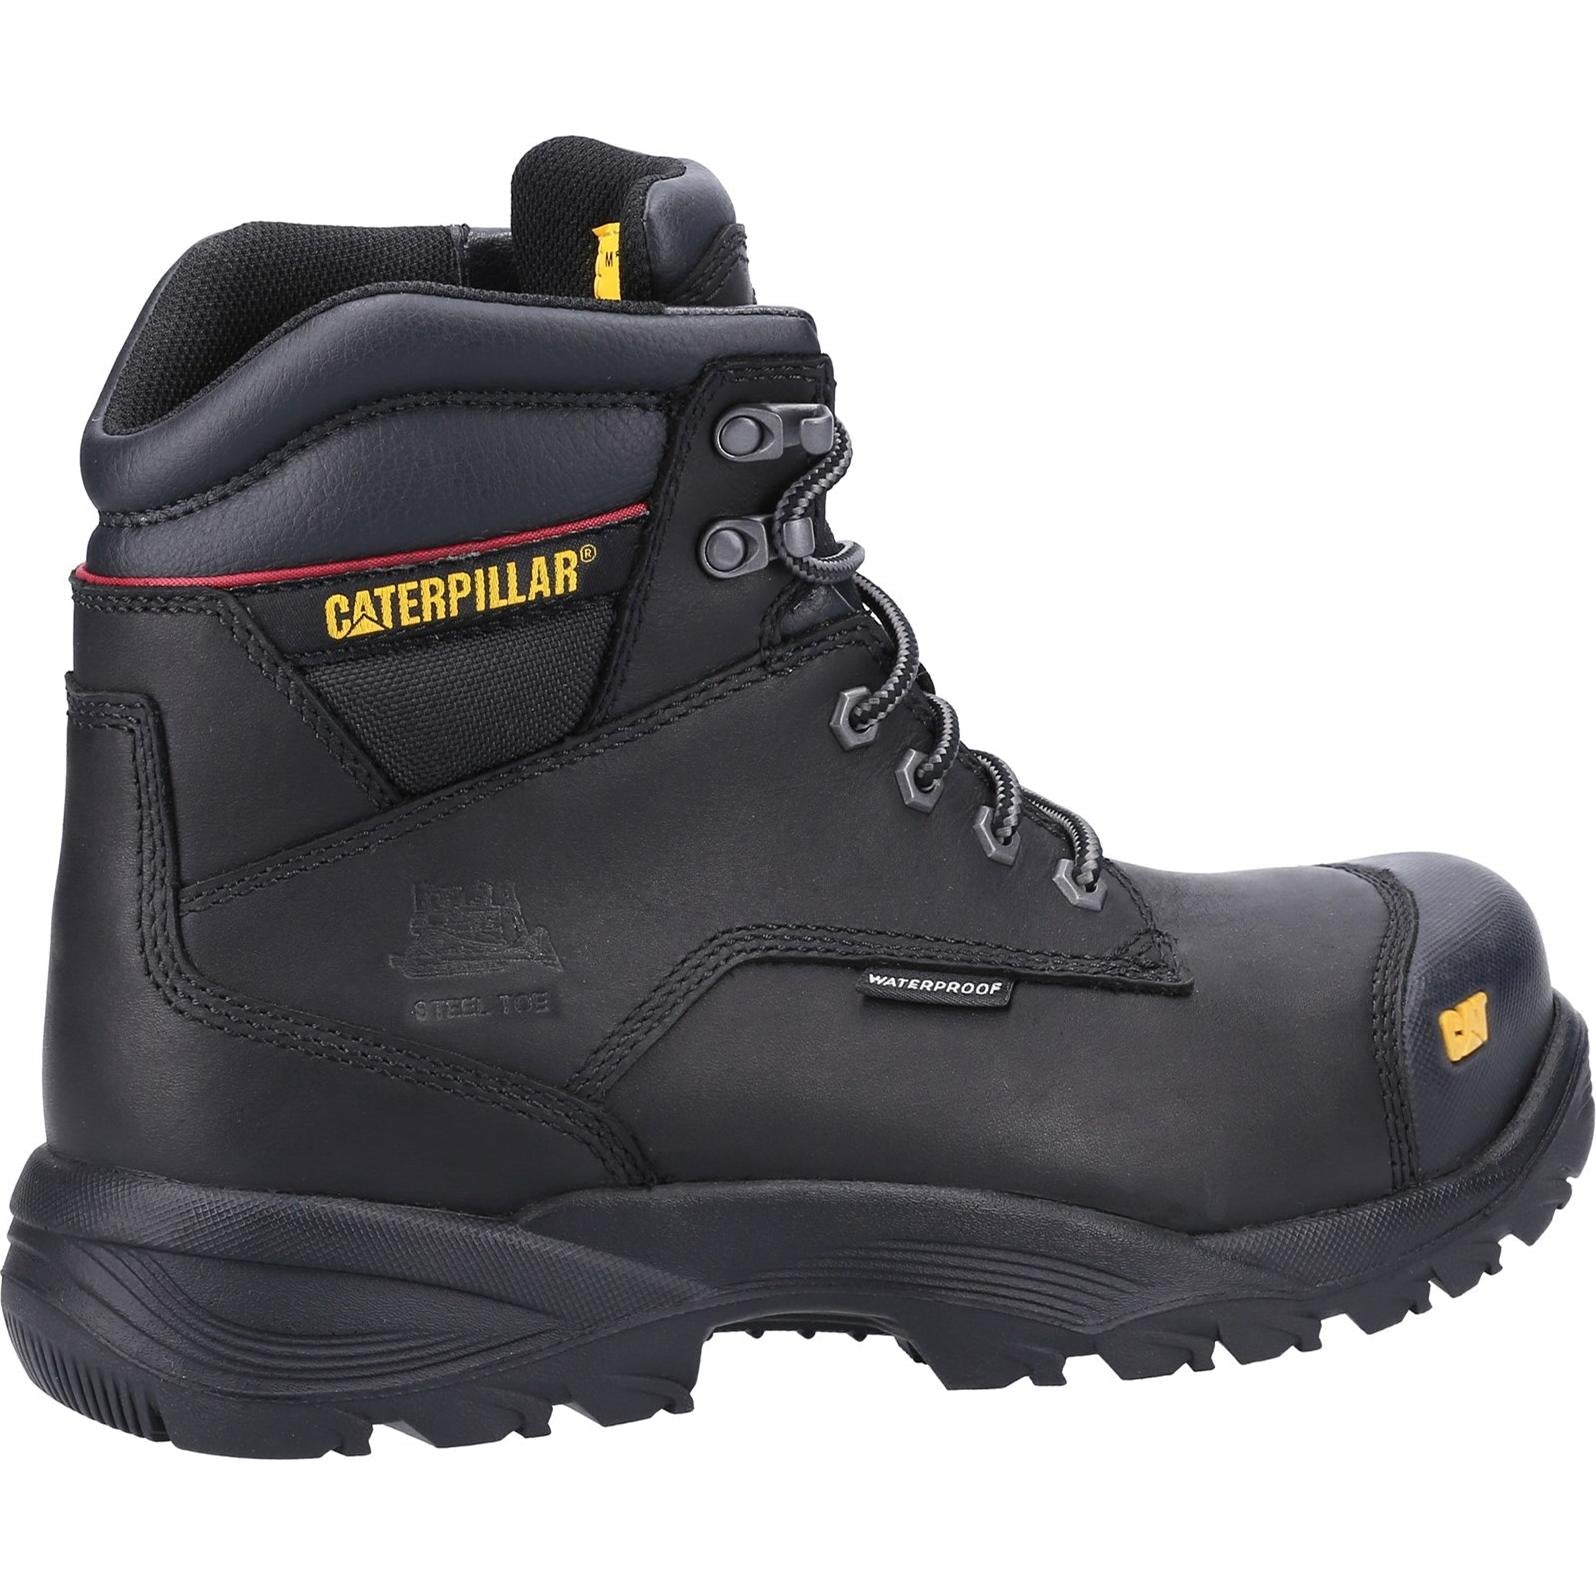 Caterpillar Spiro Waterproof Safety Boot